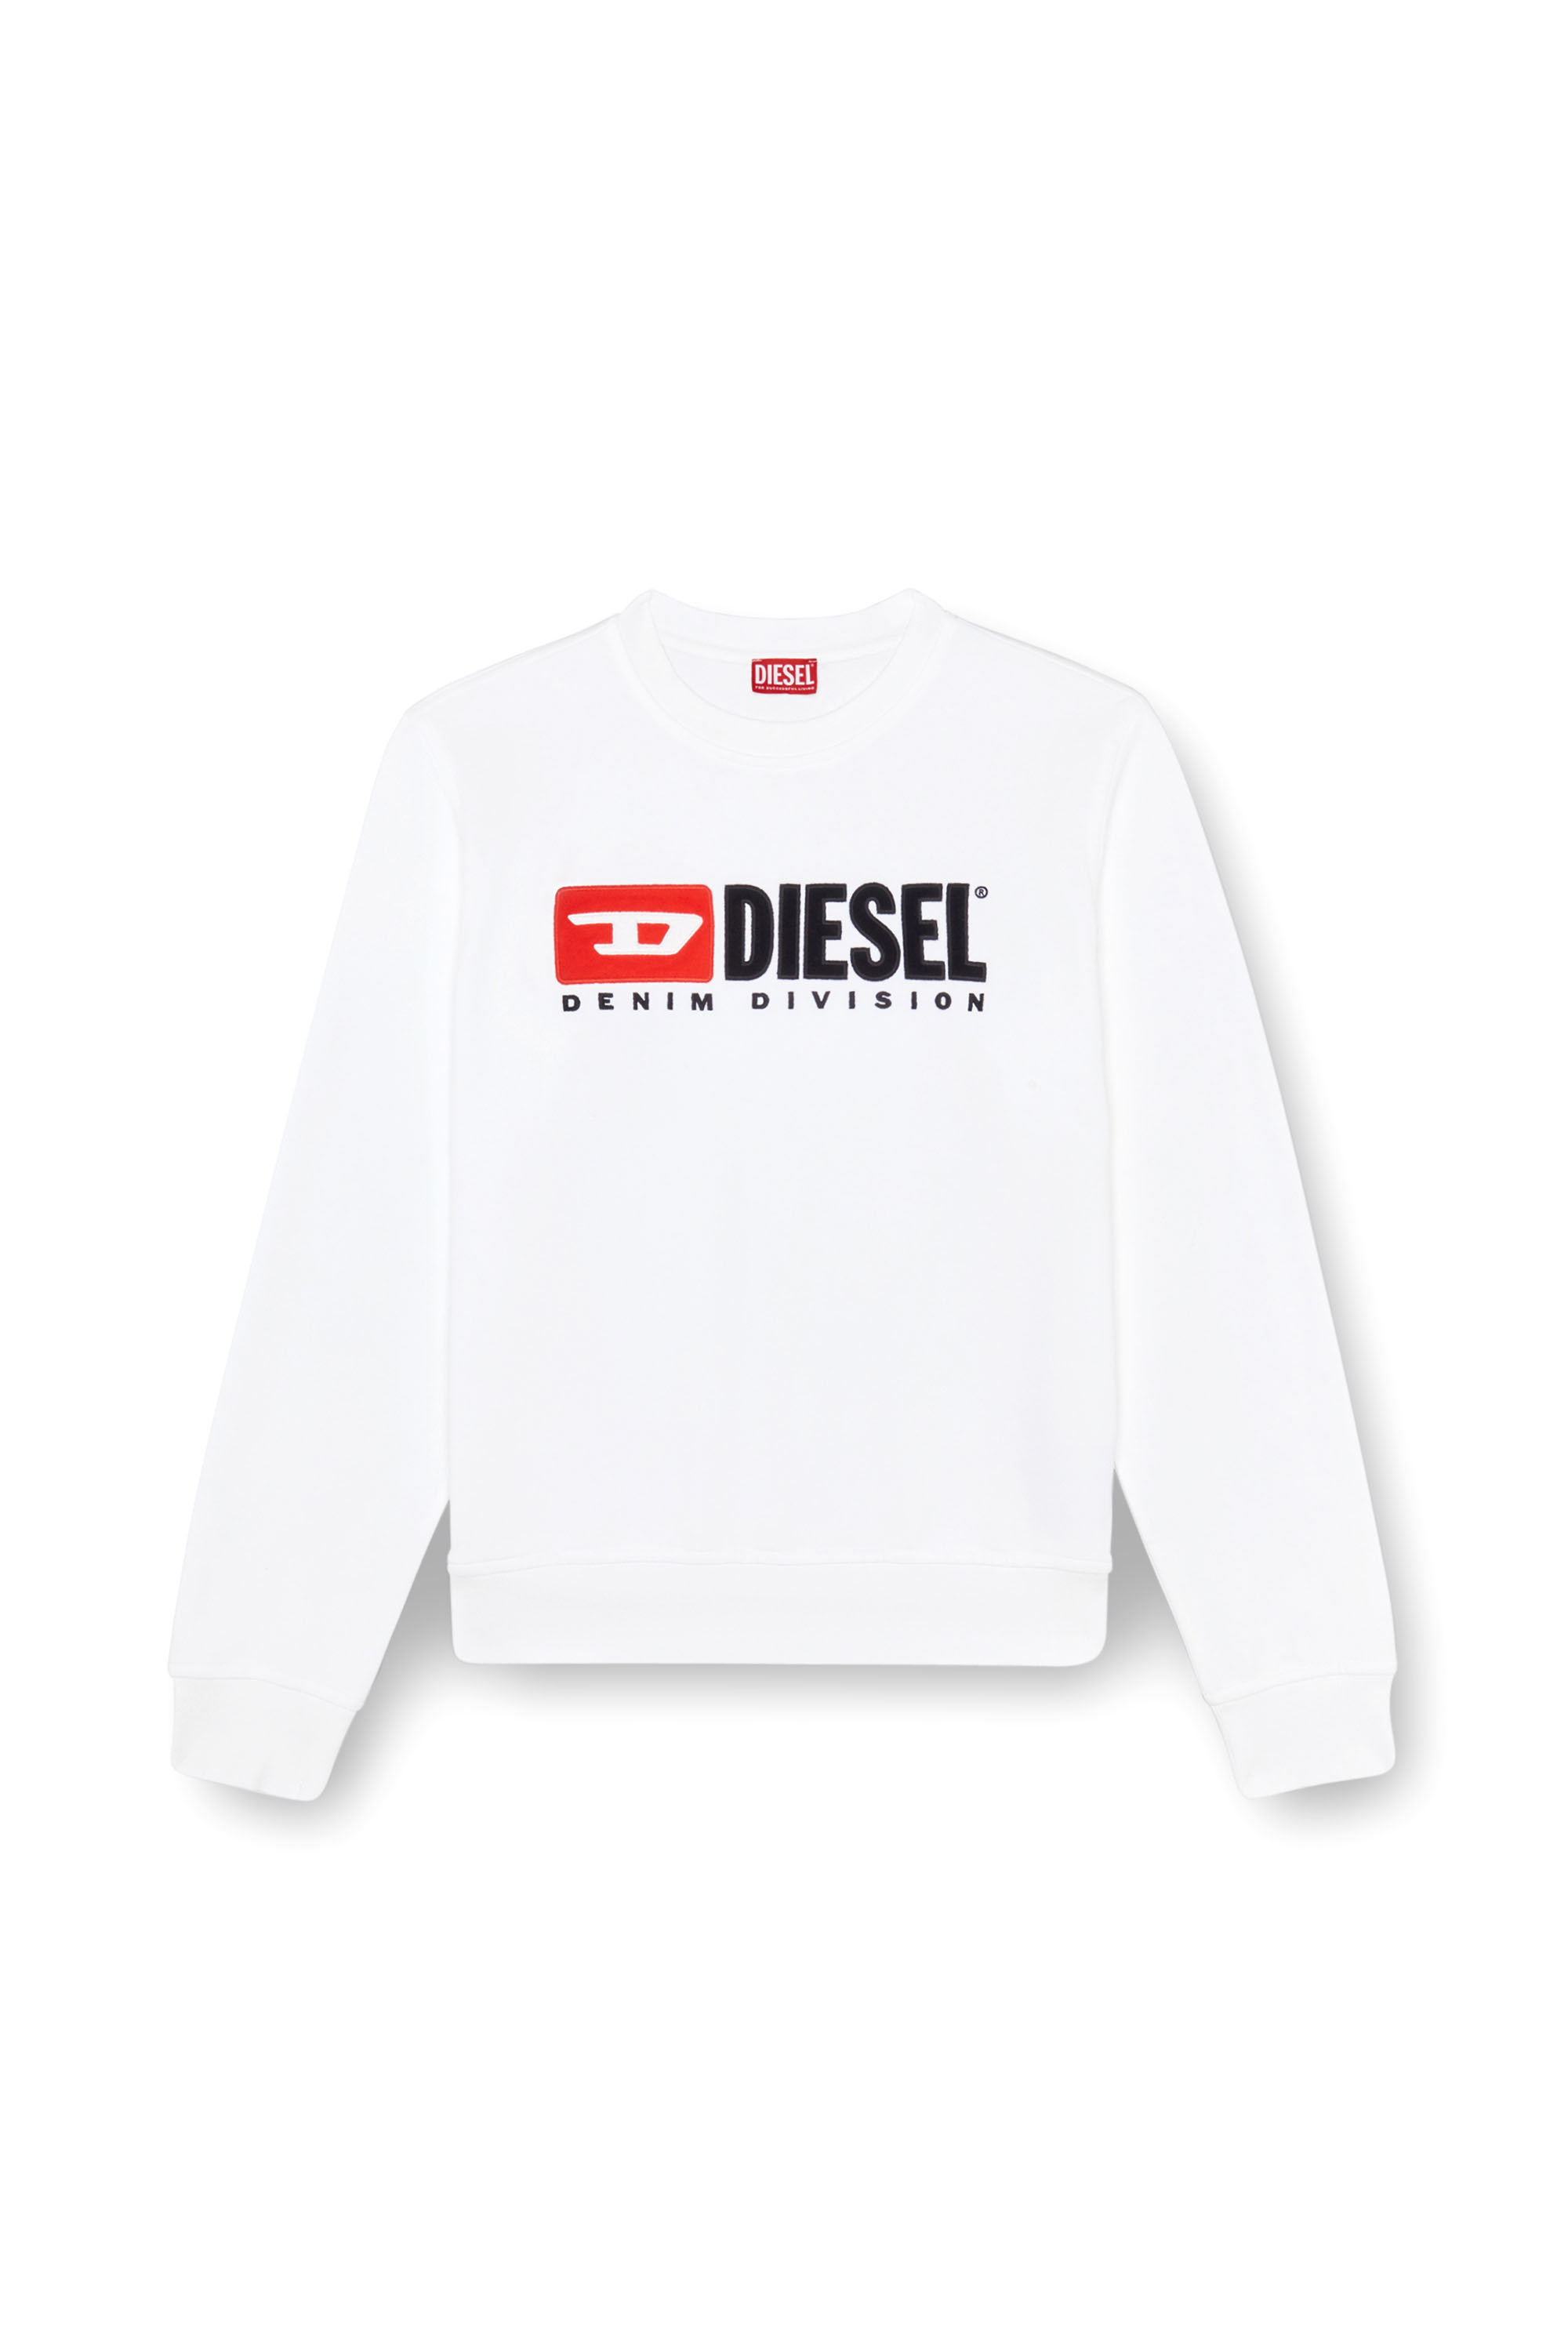 Diesel - S-BOXT-DIV, Homme Sweat-shirt avec logo Denim Division in Blanc - Image 3